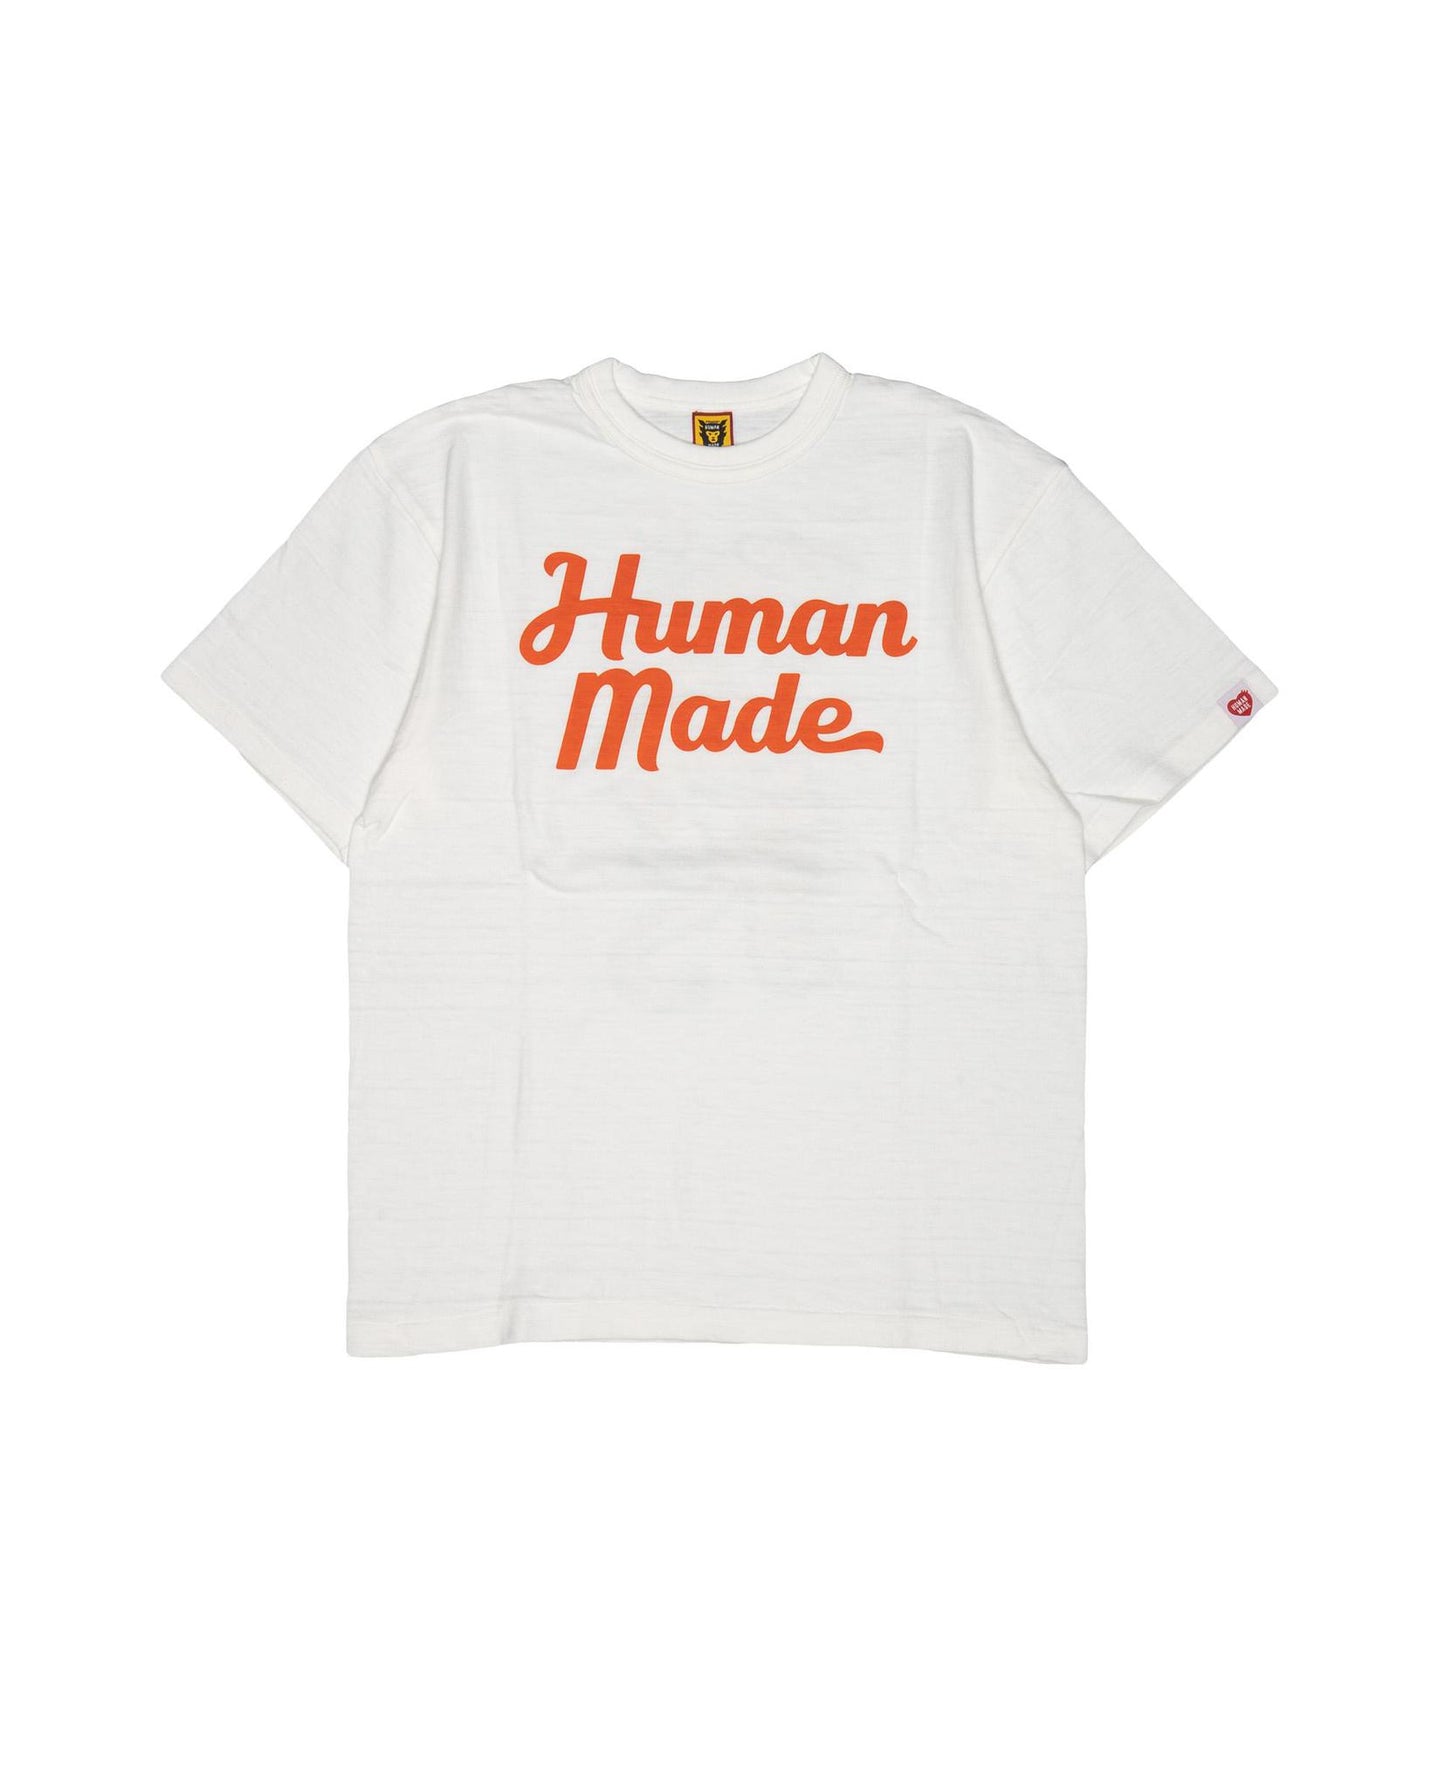 Human Made T-Shirt #11 | STASHED